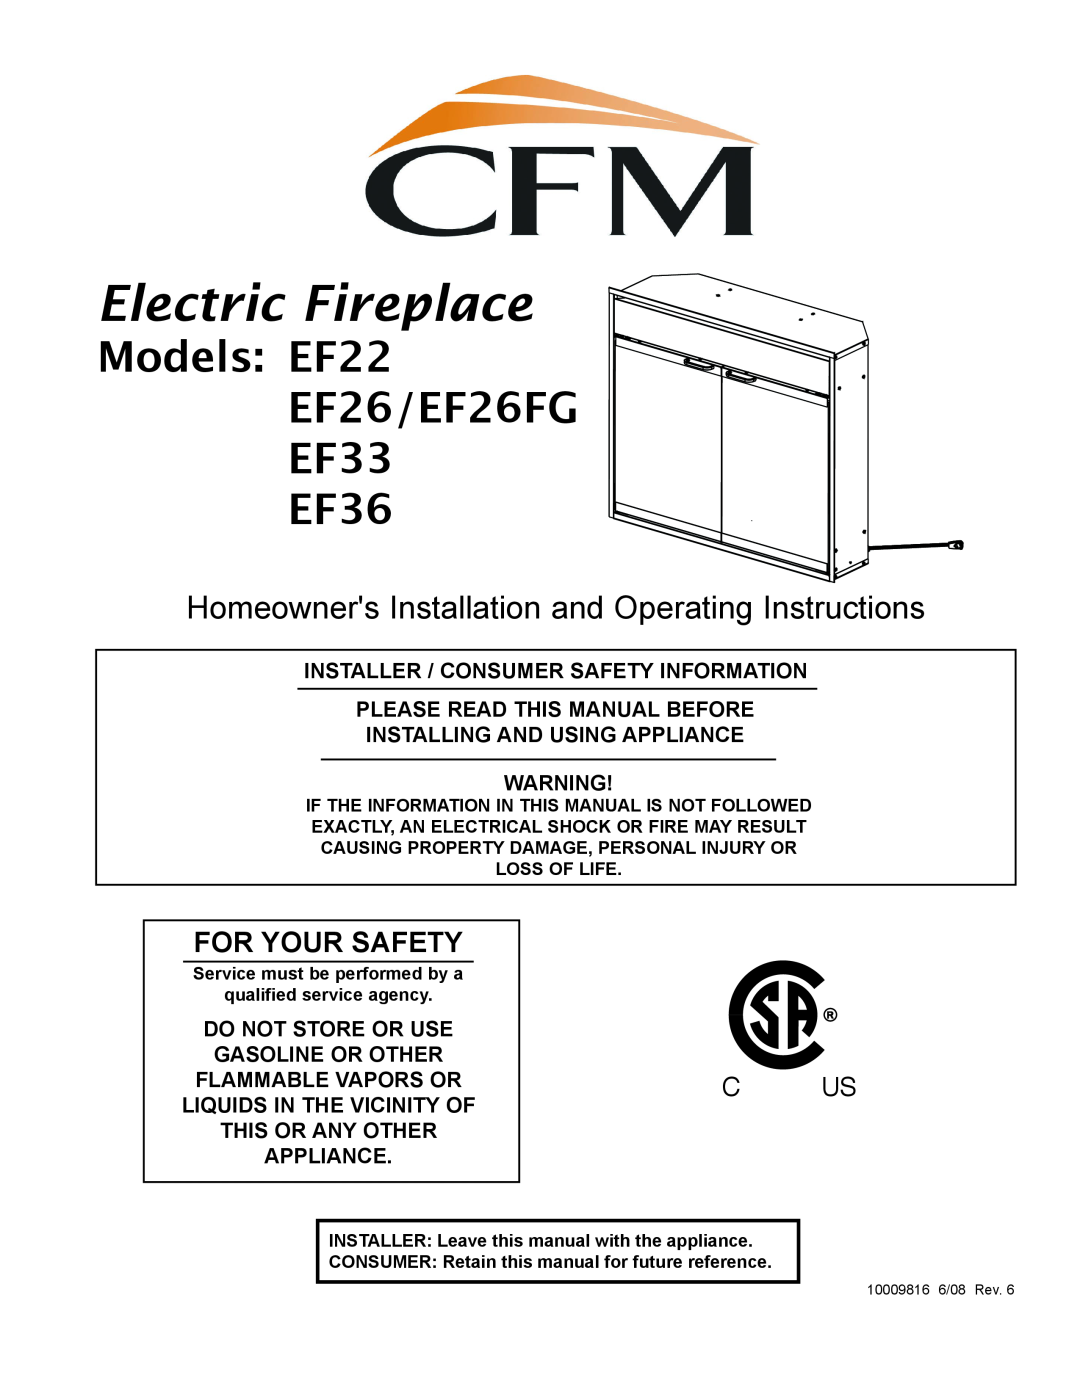 Vermont Casting operating instructions Electric Fireplace, Models EF22 EF26/EF26FG EF33 EF36, For Your Safety 